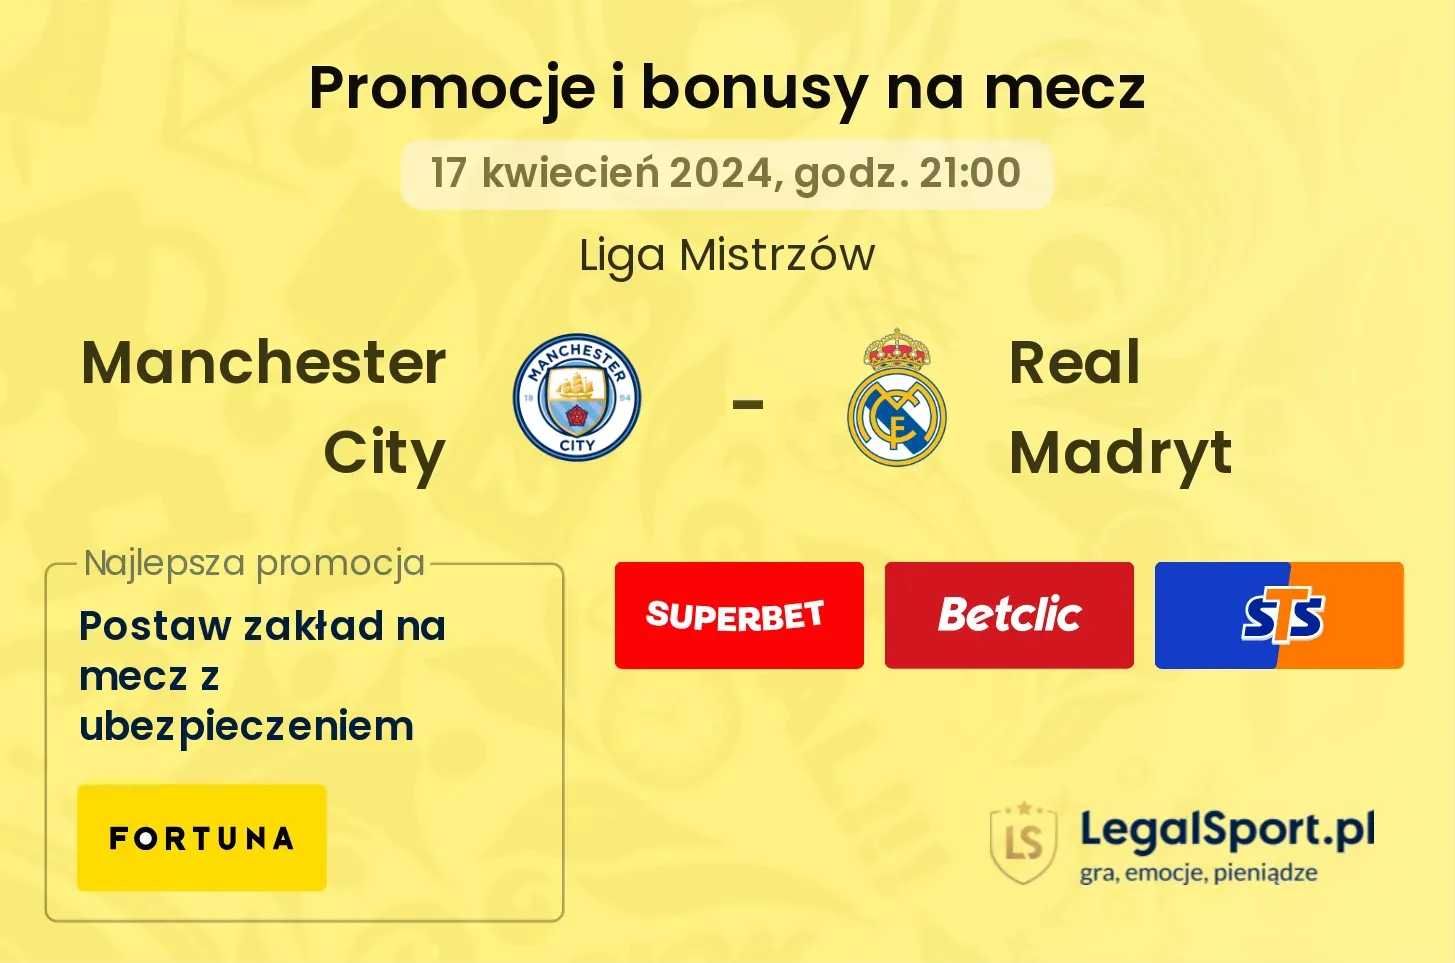 Manchester City - Real Madryt promocje bonusy na mecz